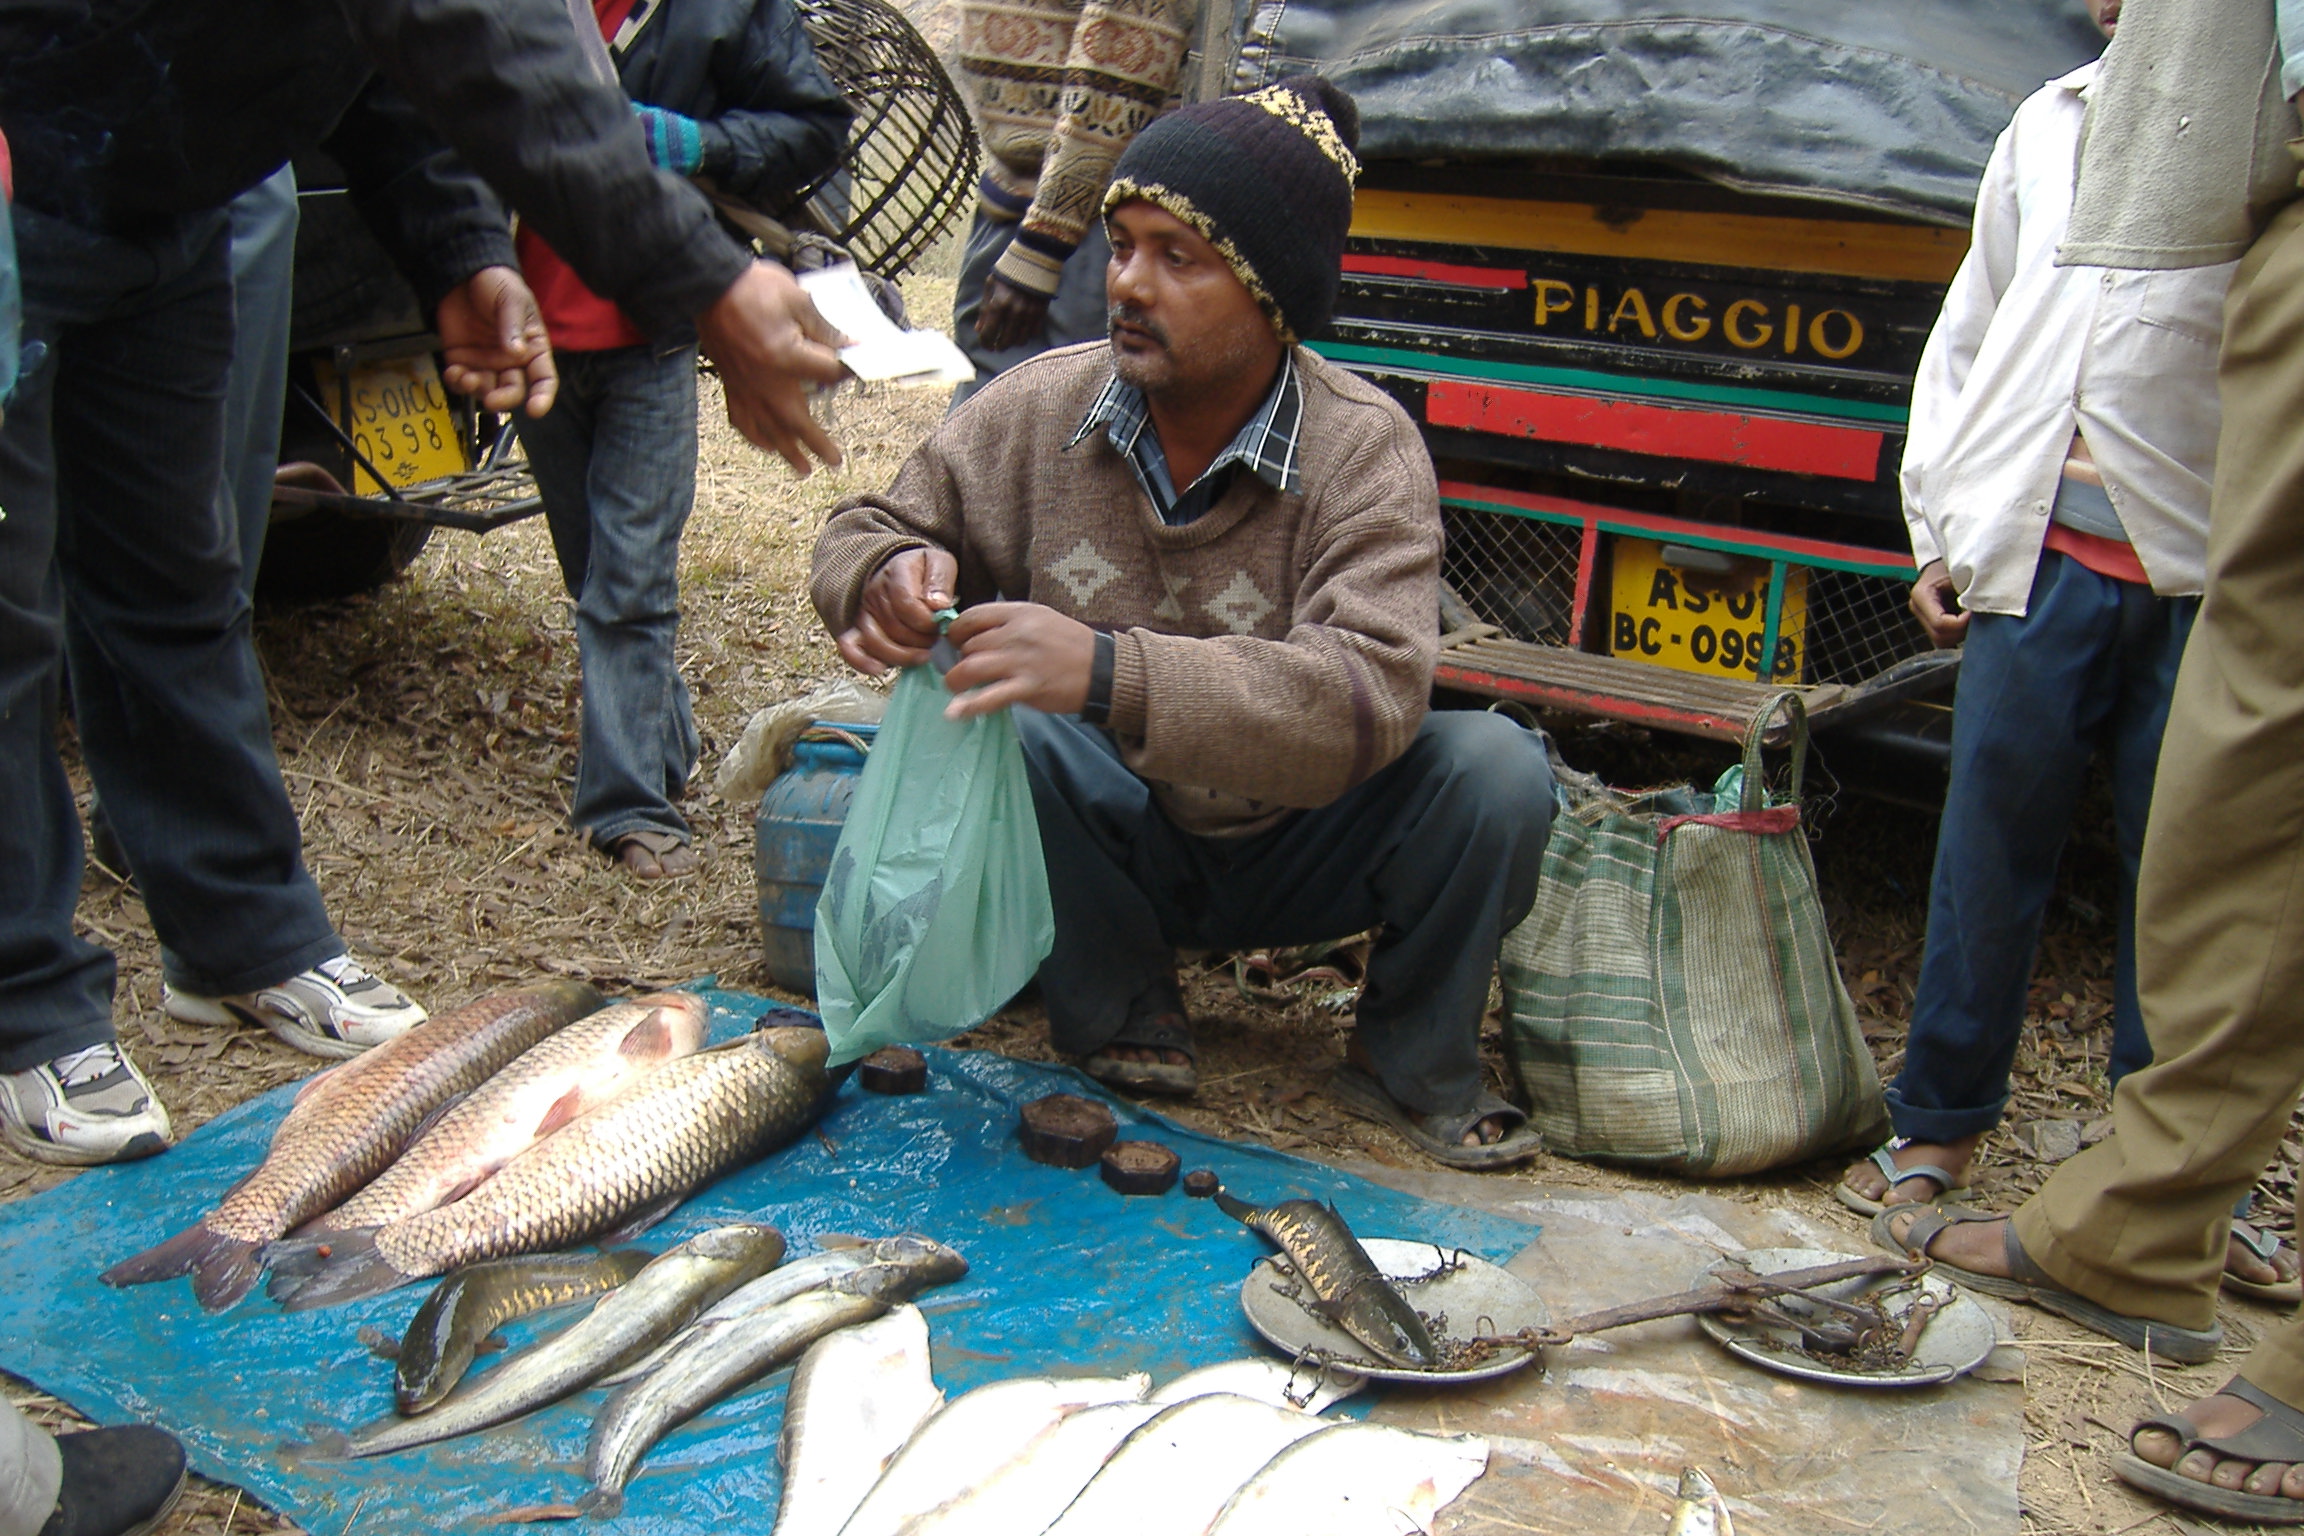 Fishermen in Northern India